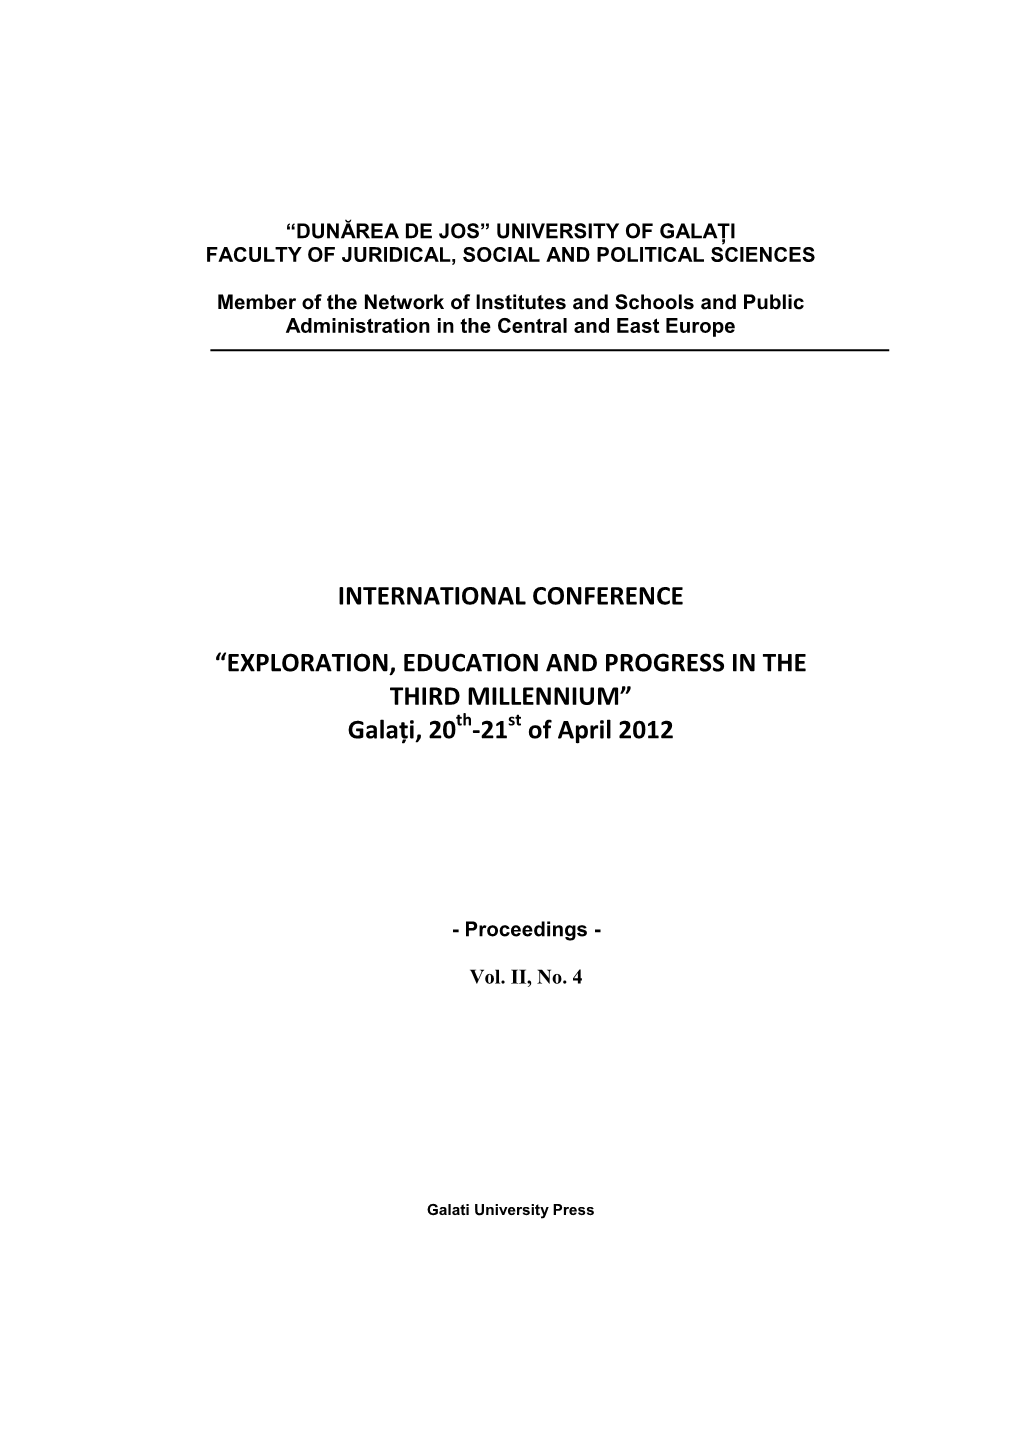 Conference Proceedings 2012 Vol II